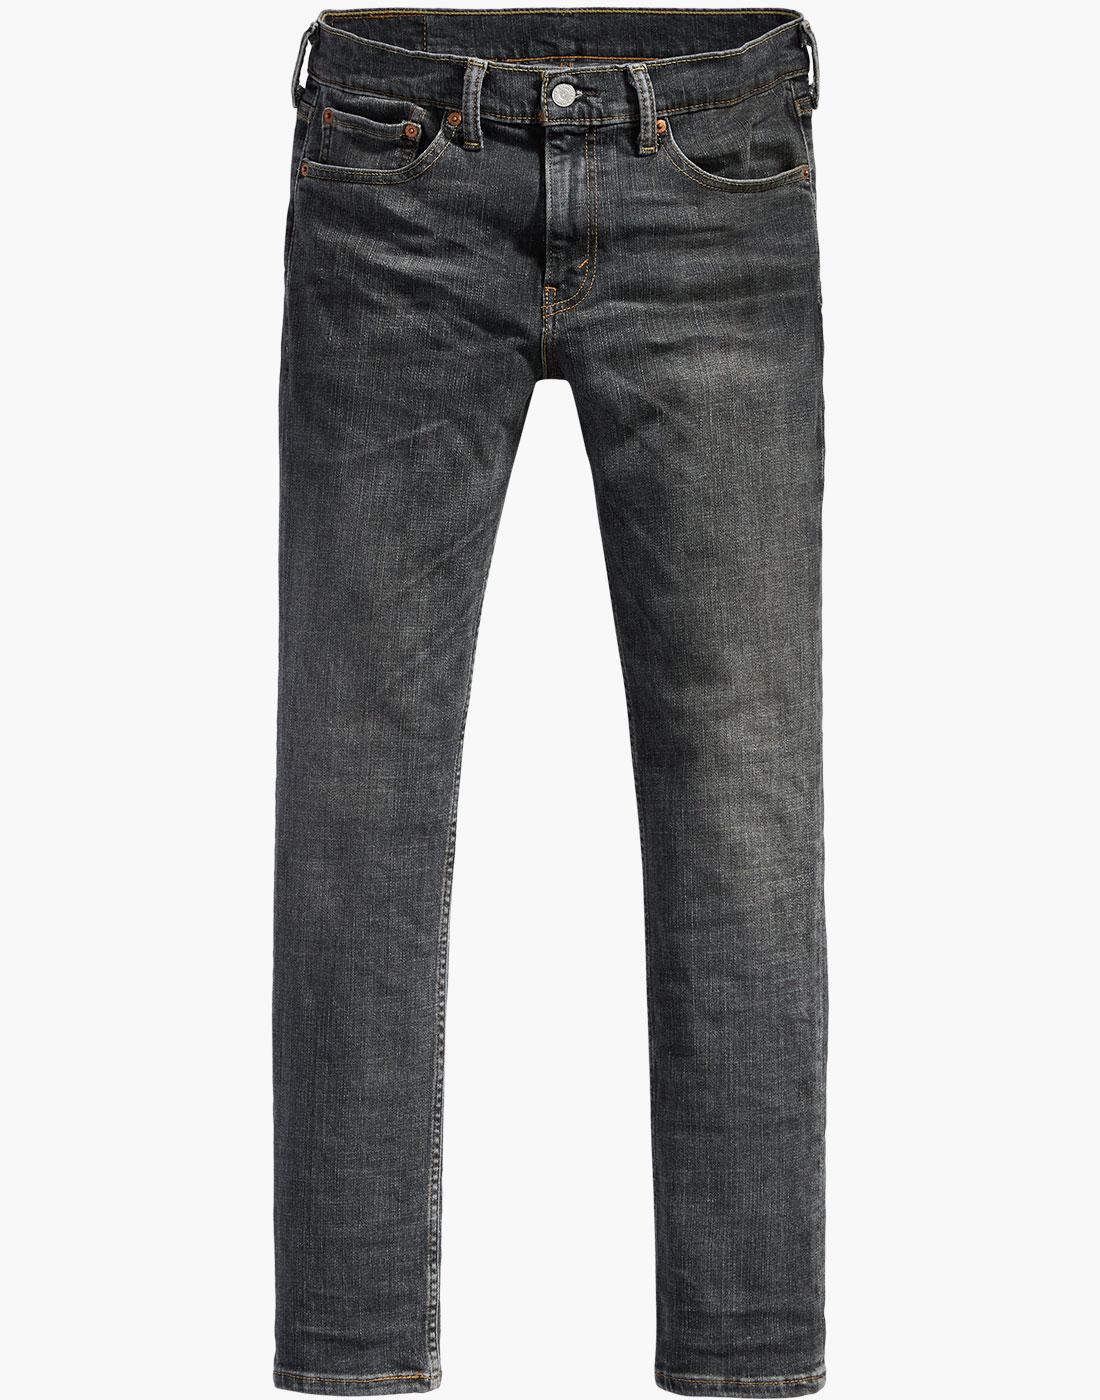 black levi's 511 men's jeans